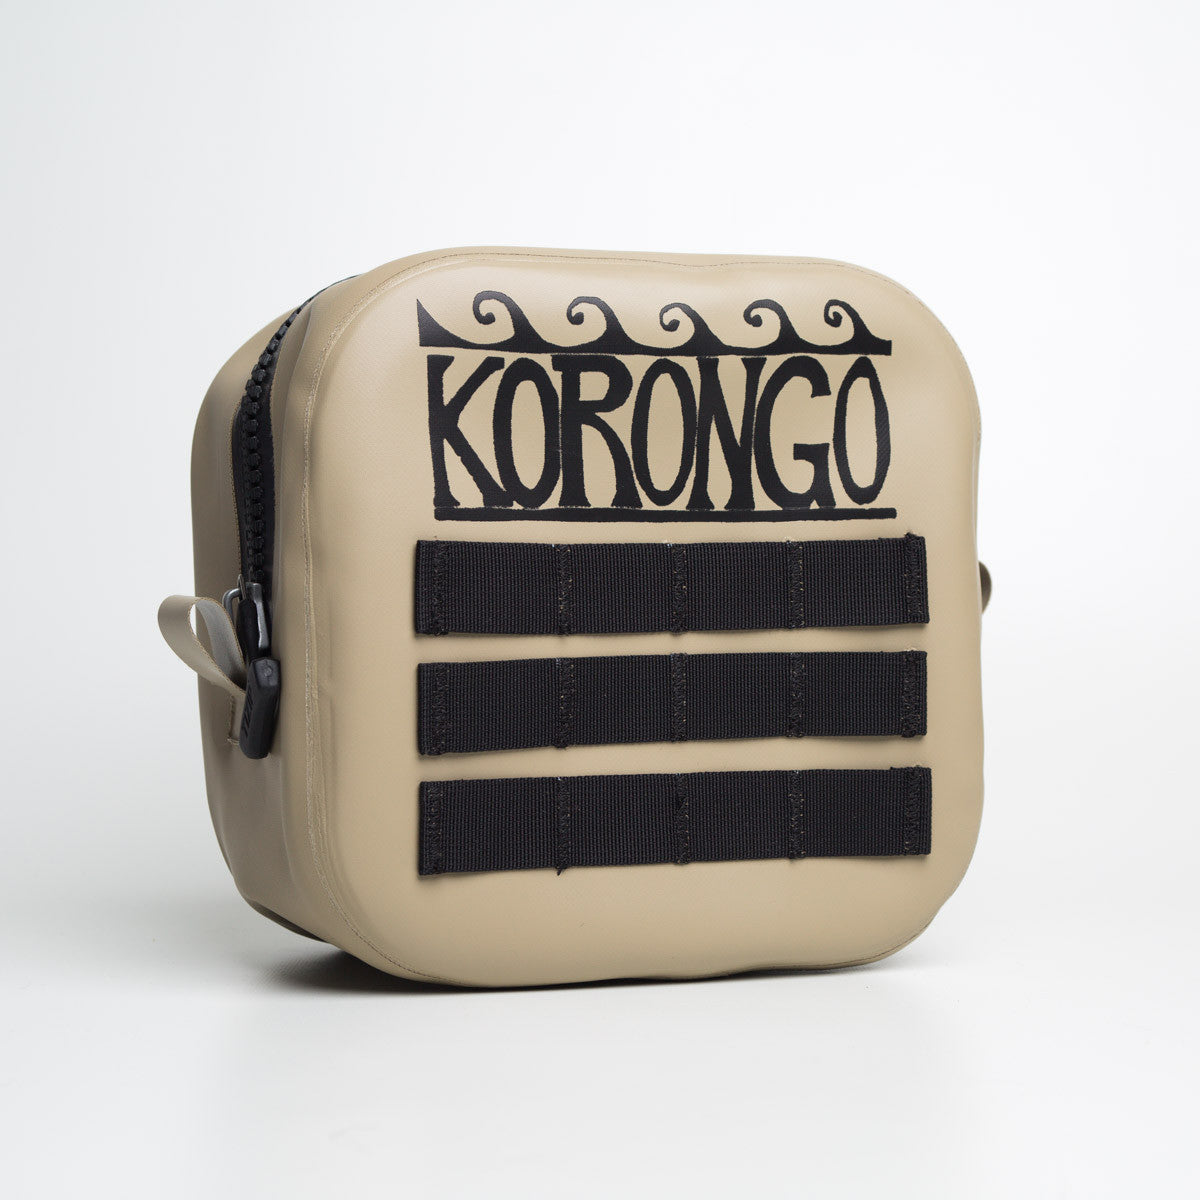 Korongo Fully Submersible Dry Bag - KORONGO